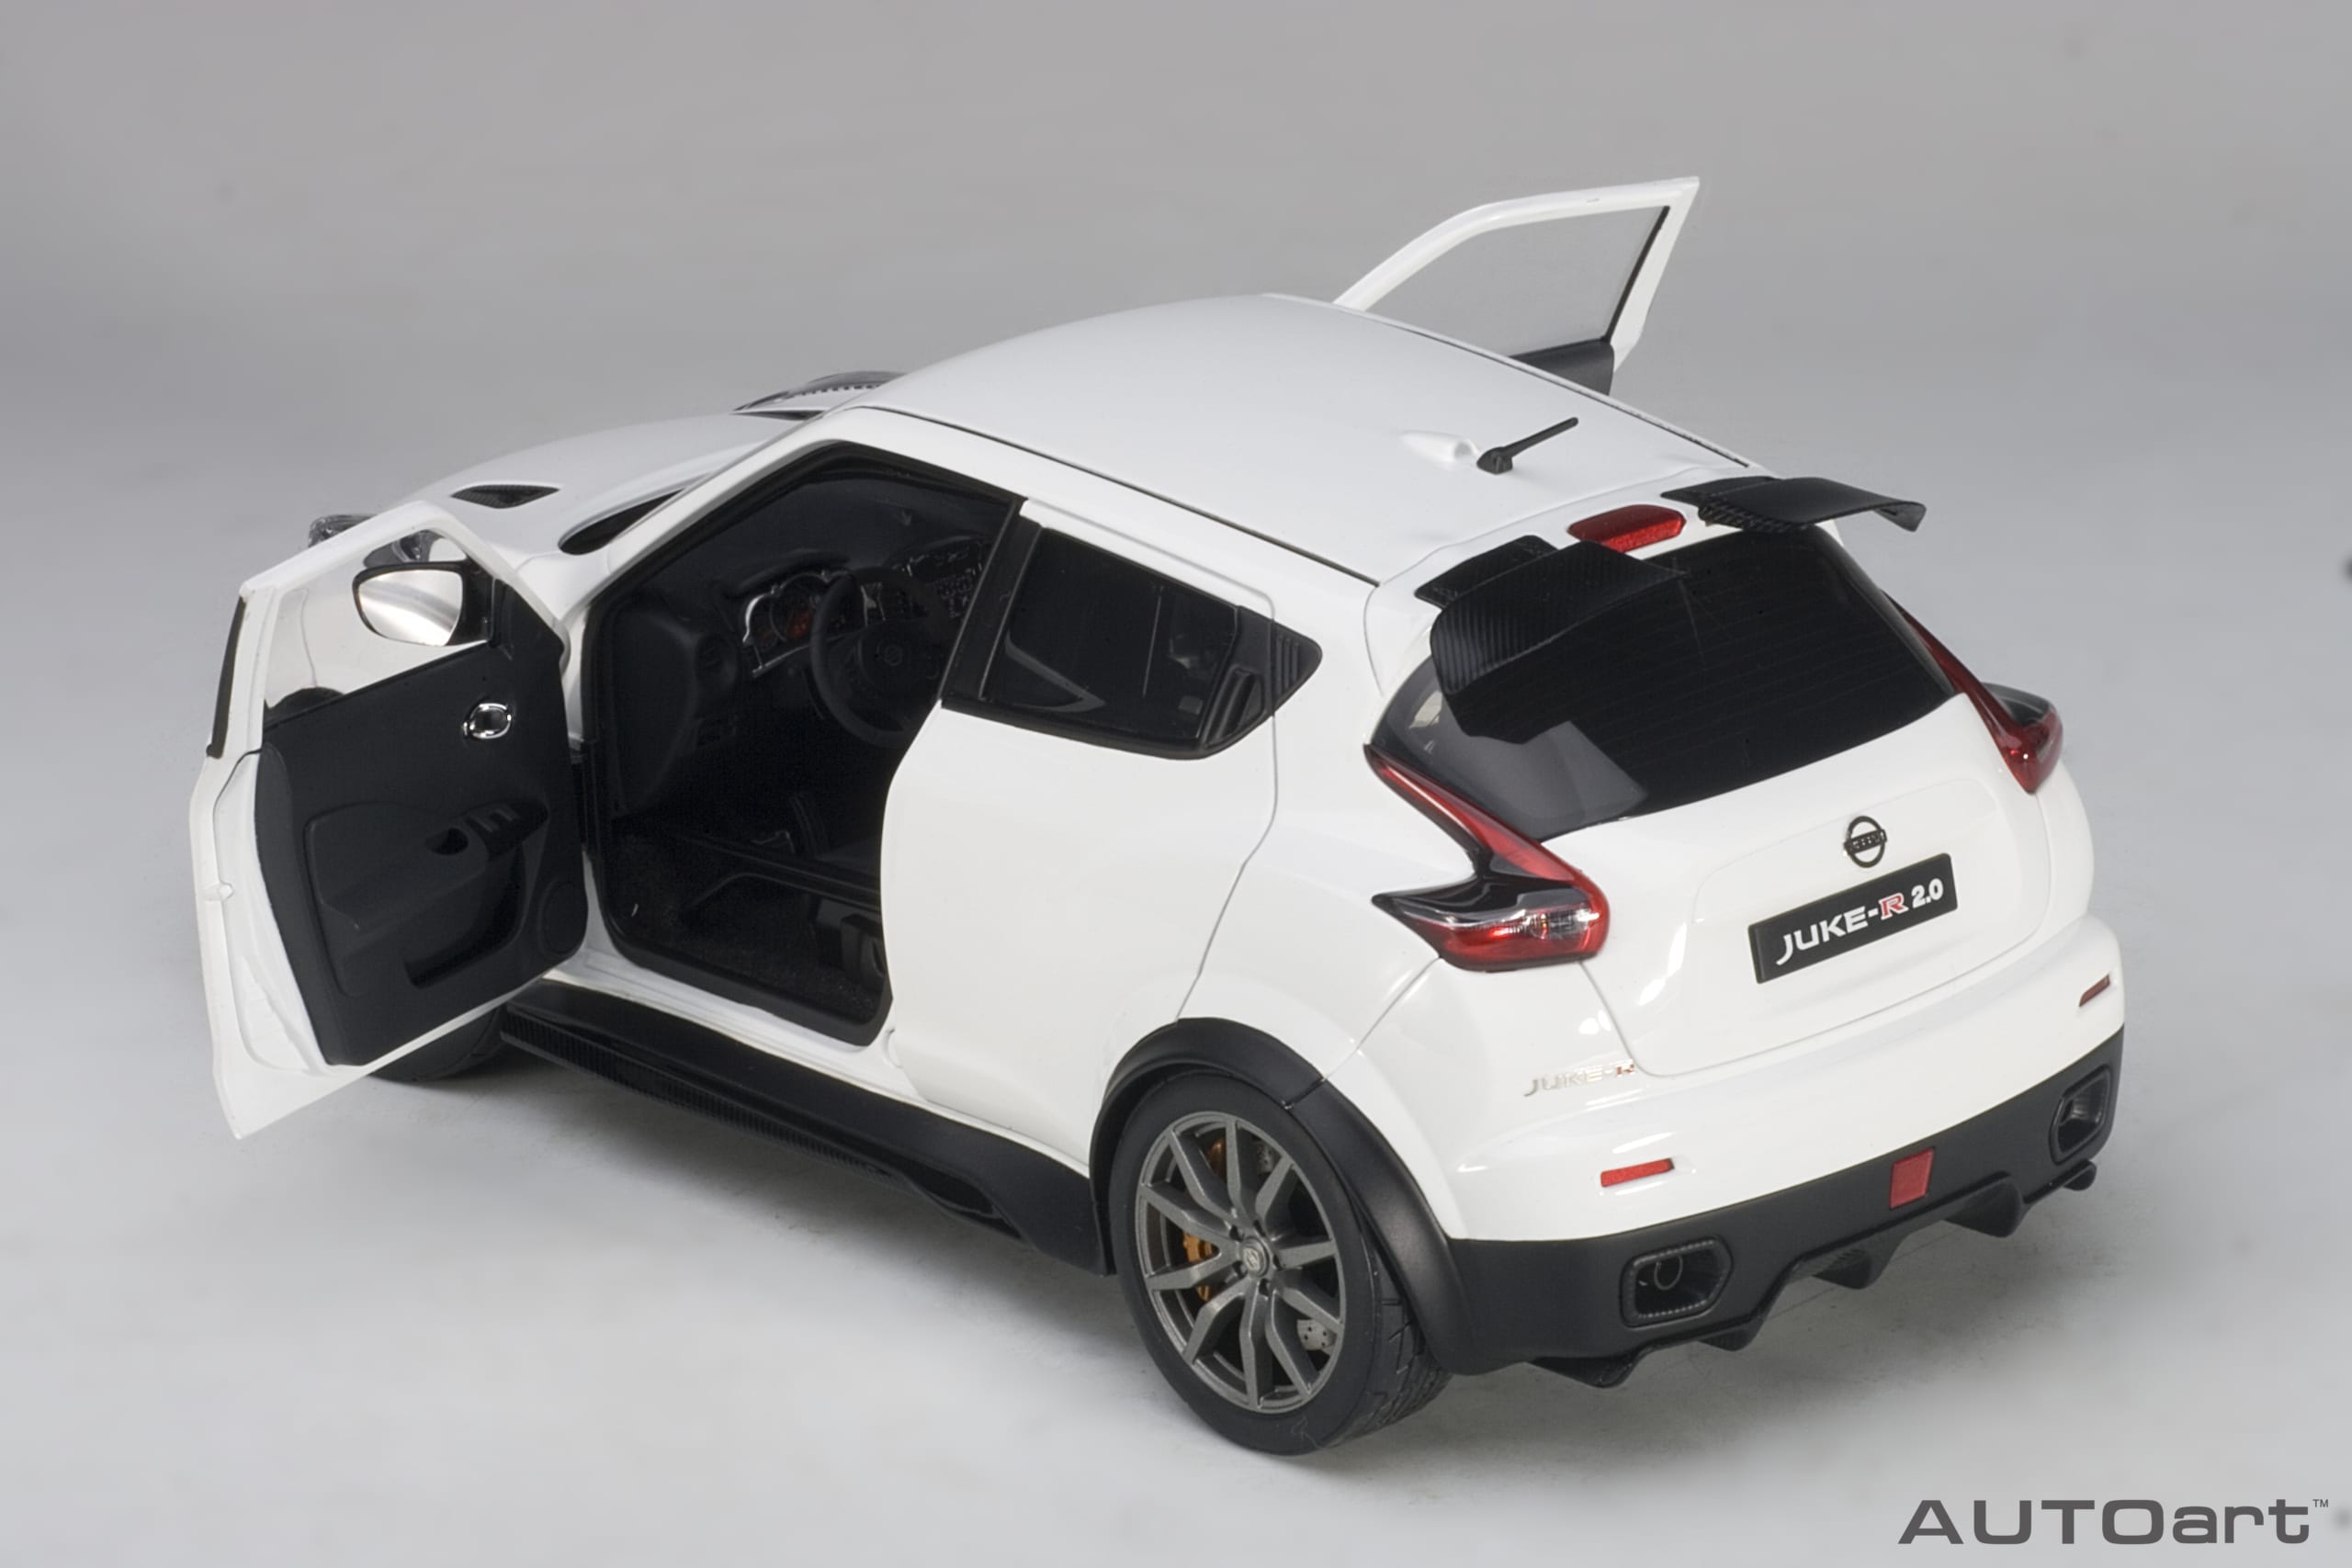 Nissan Juke-R 2.0 (White) | AUTOart